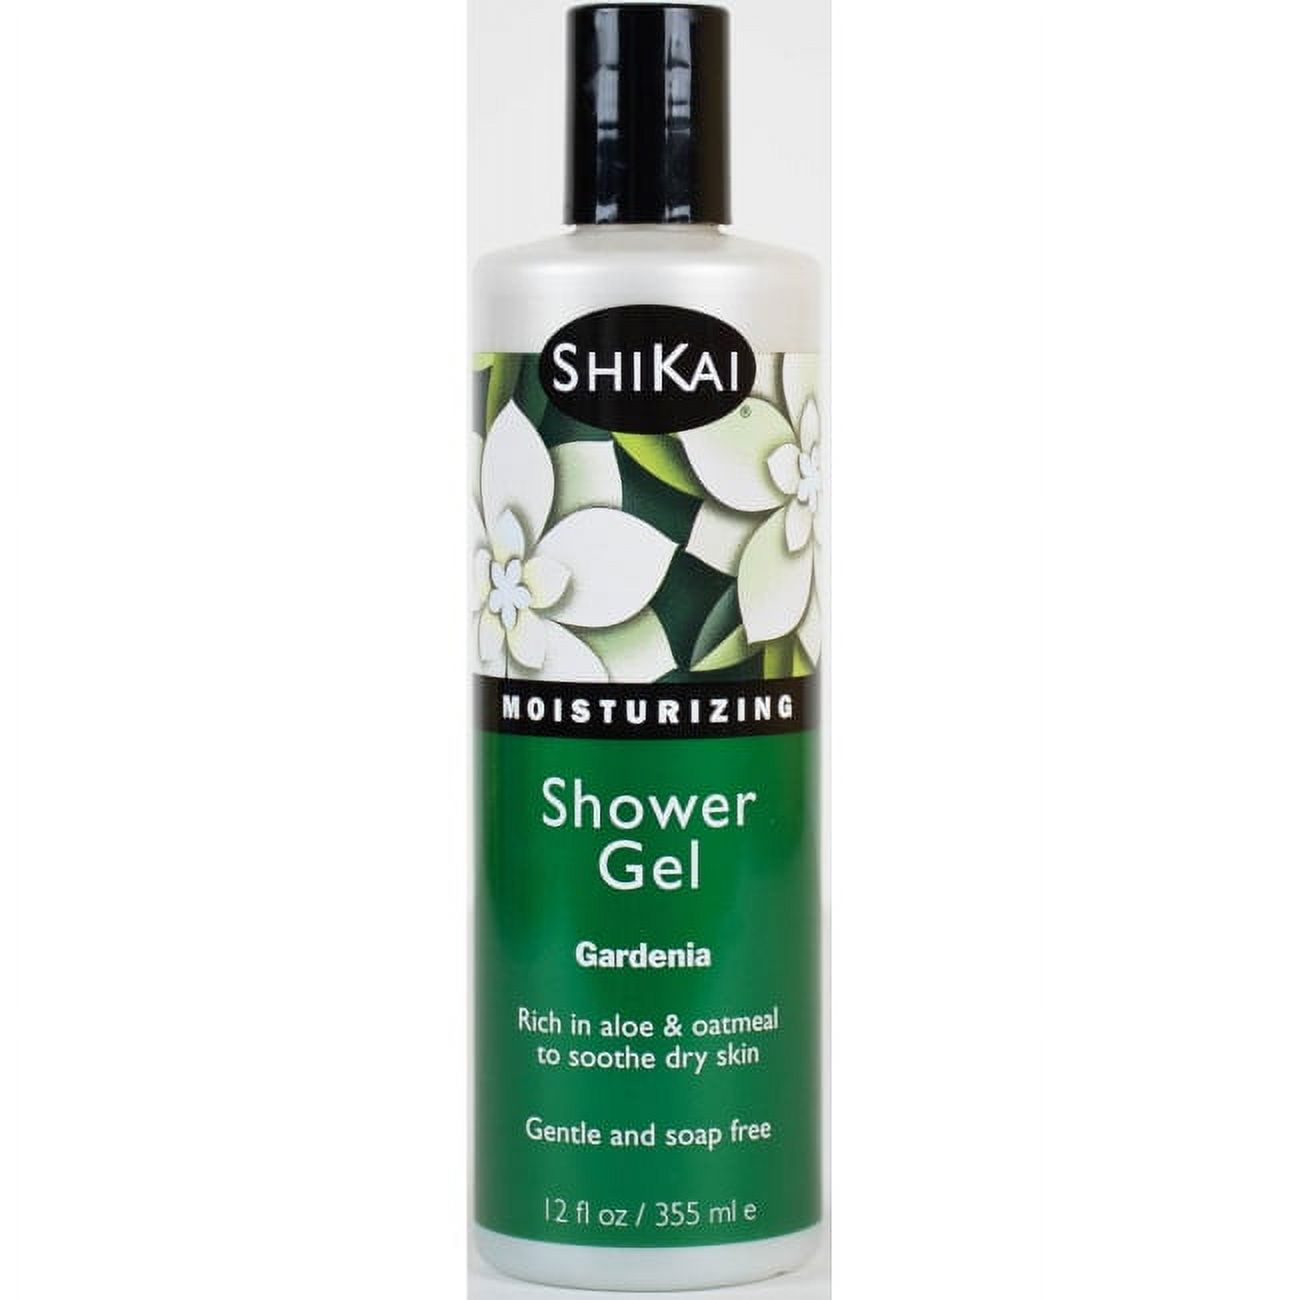 Shikai Moisturizing Shower Gel-Gardenia 12 oz Gel - image 1 of 3